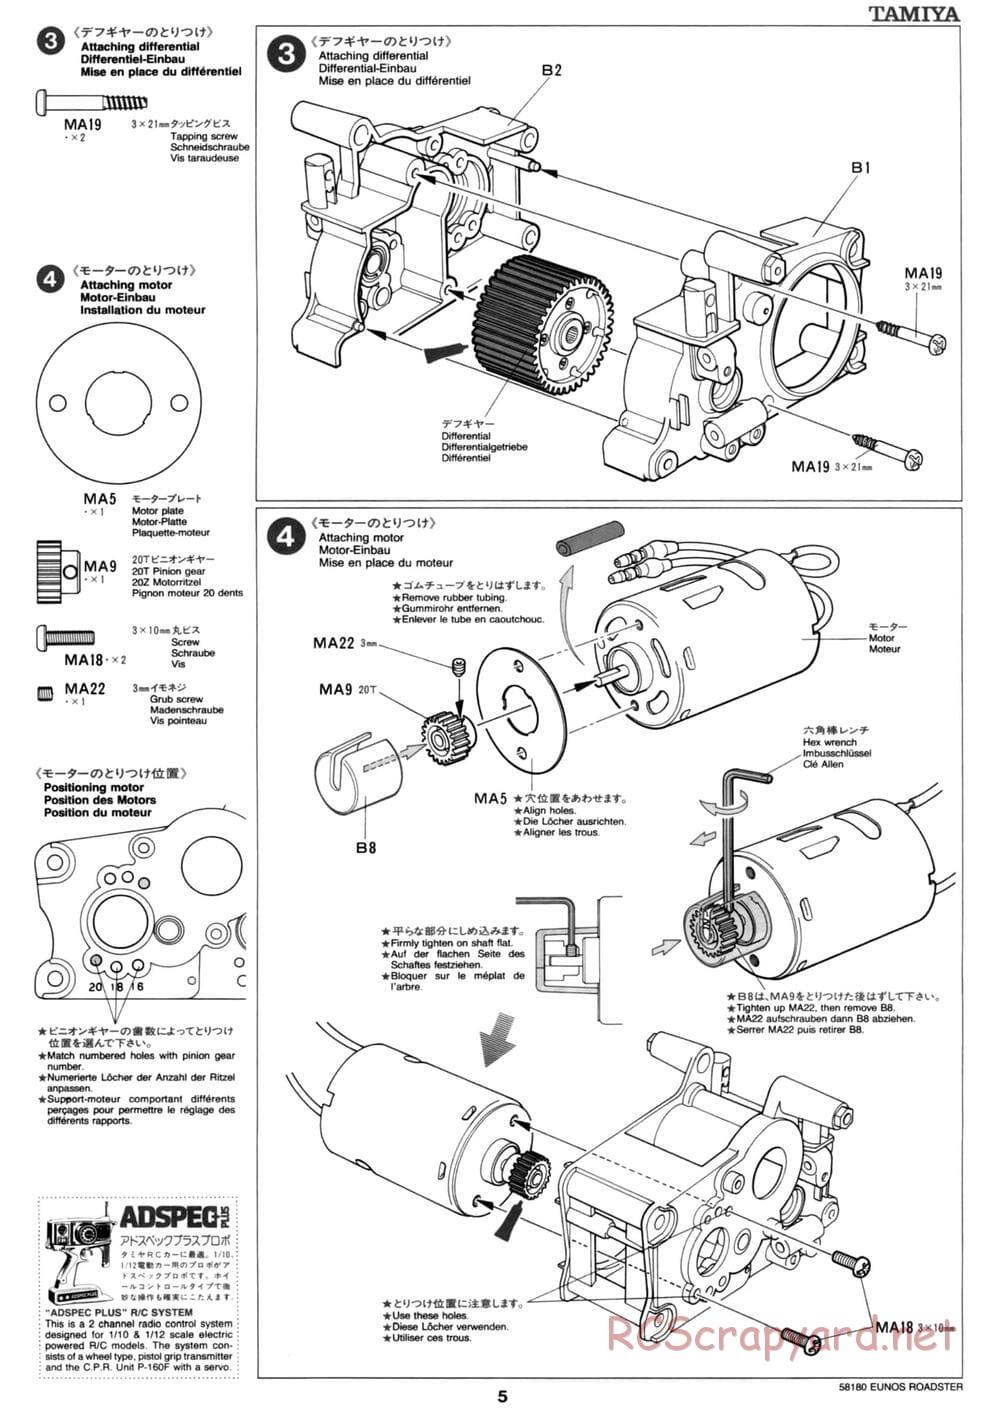 Tamiya - Eunos Roadster - M02M Chassis - Manual - Page 5